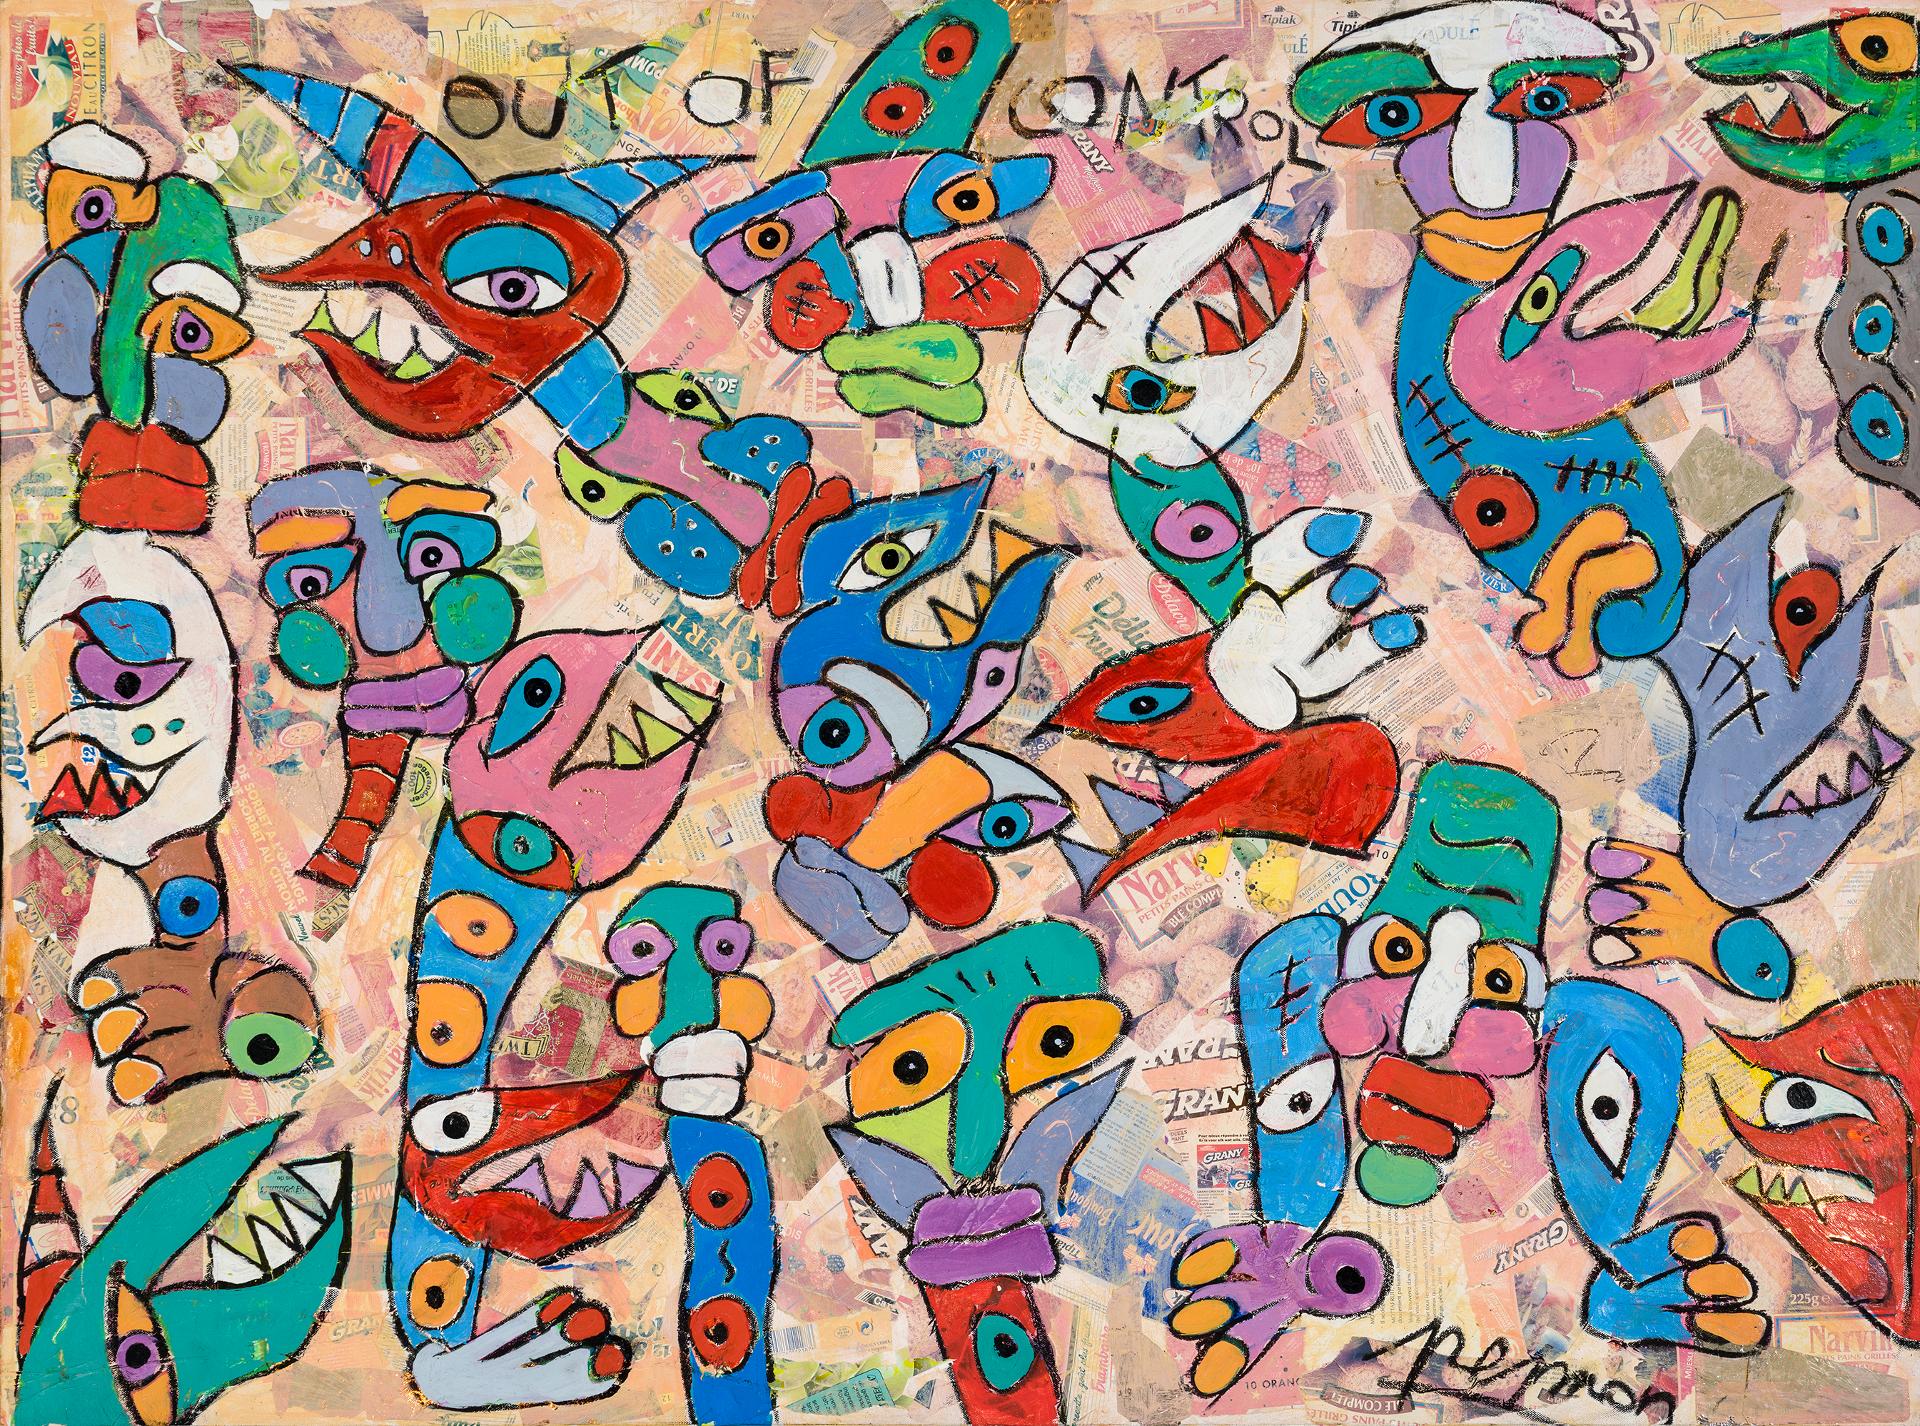 Pejman Ebadi - Out of Control, 1996